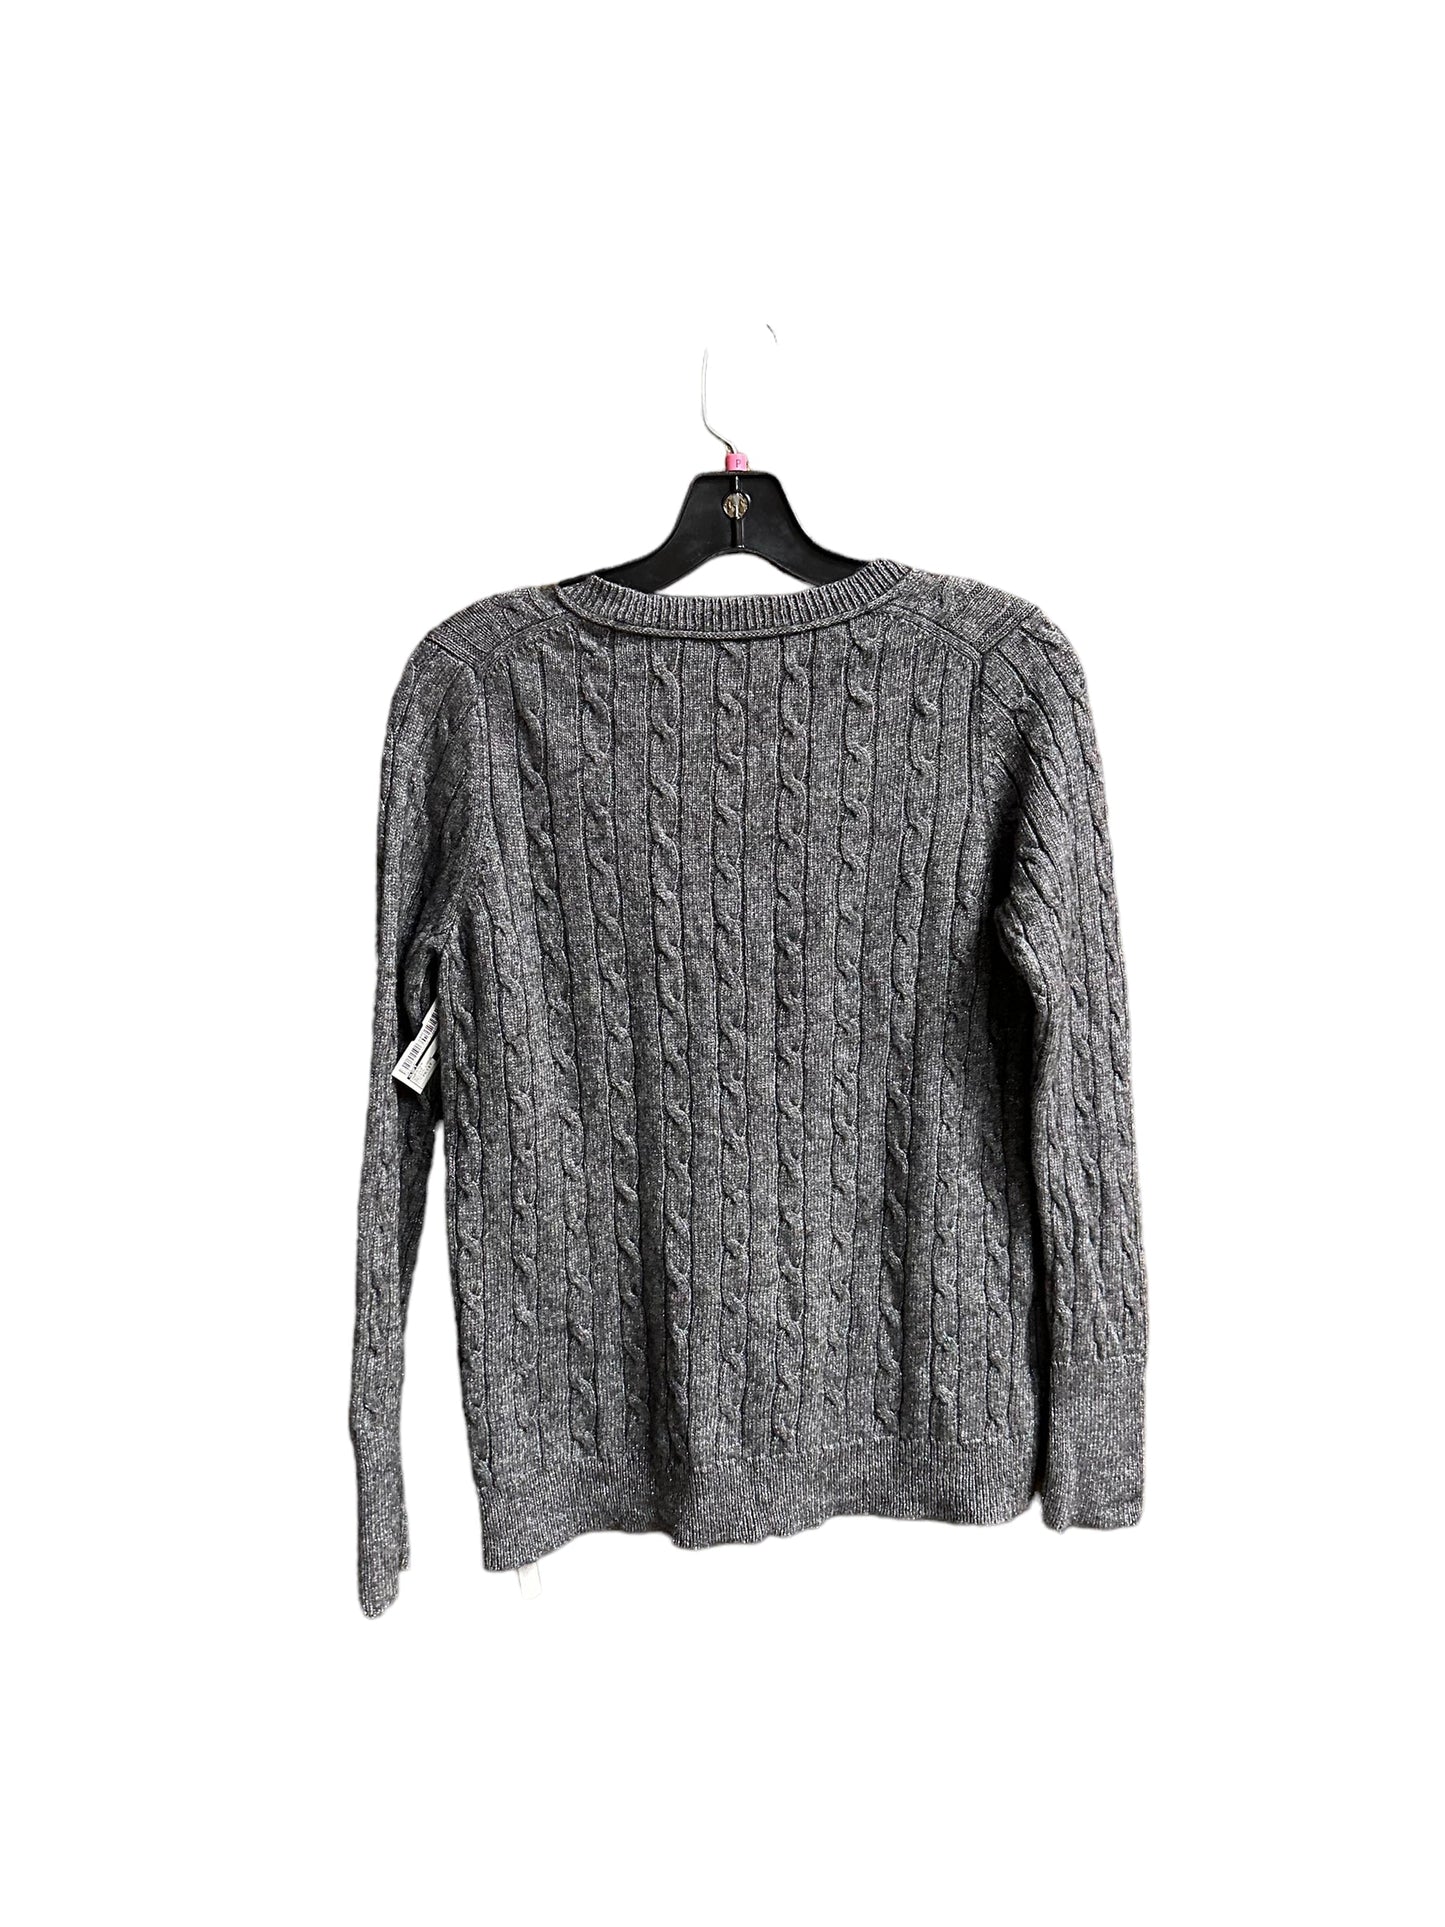 Sweater By Loft  Size: Petite Large